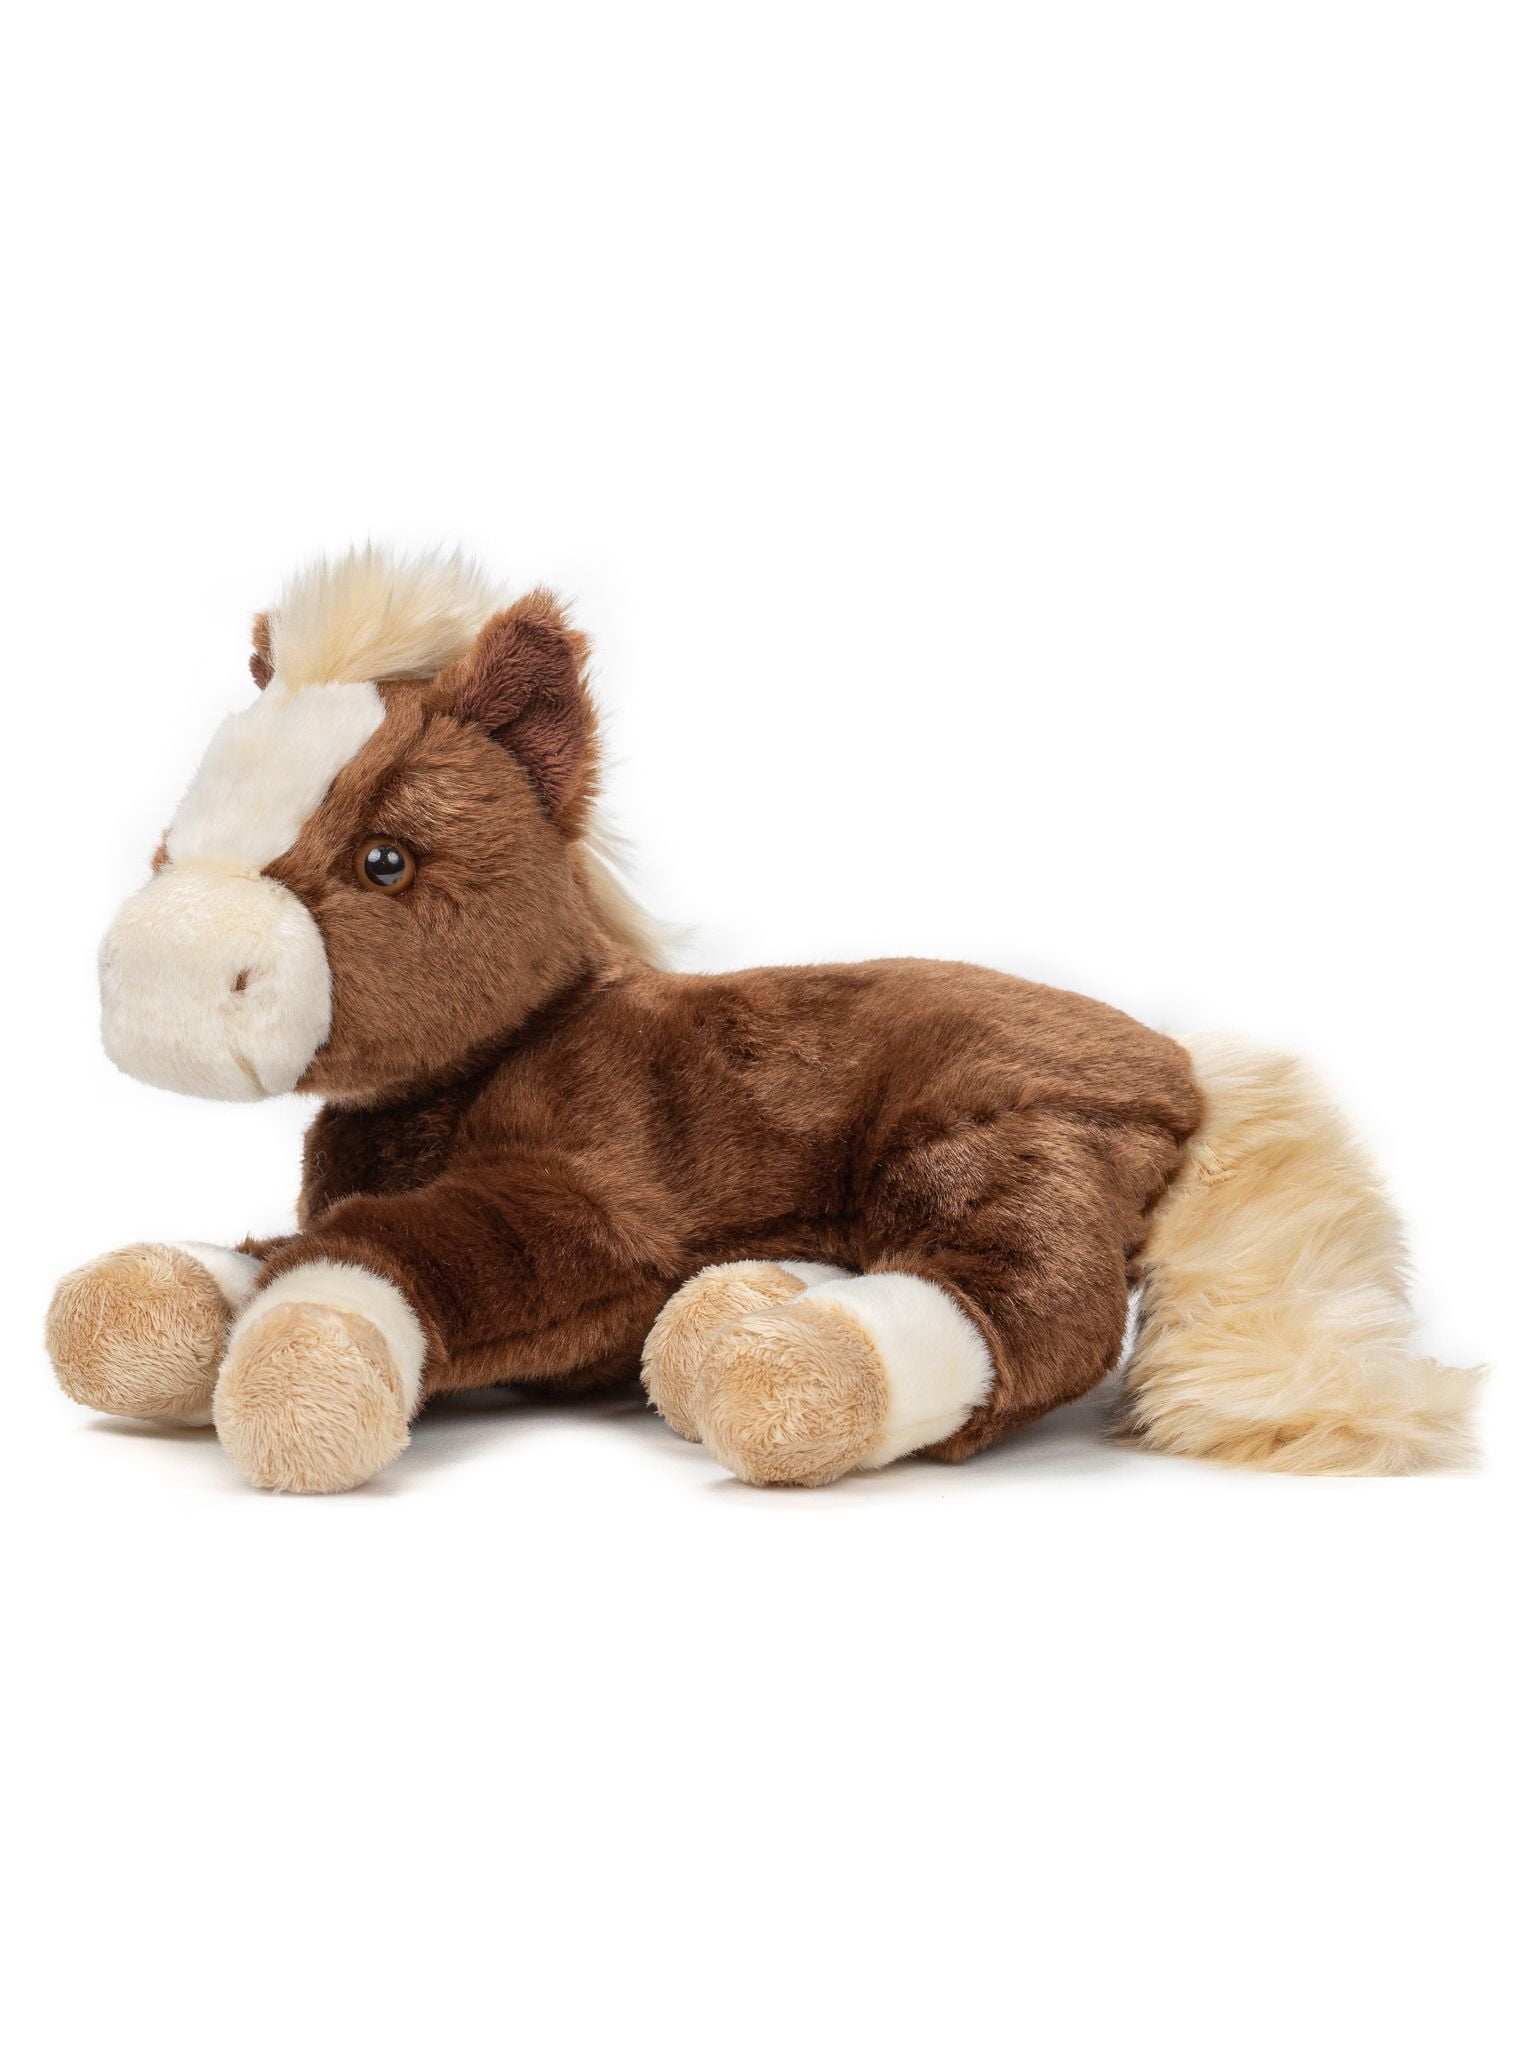 horse stuffed animal walmart